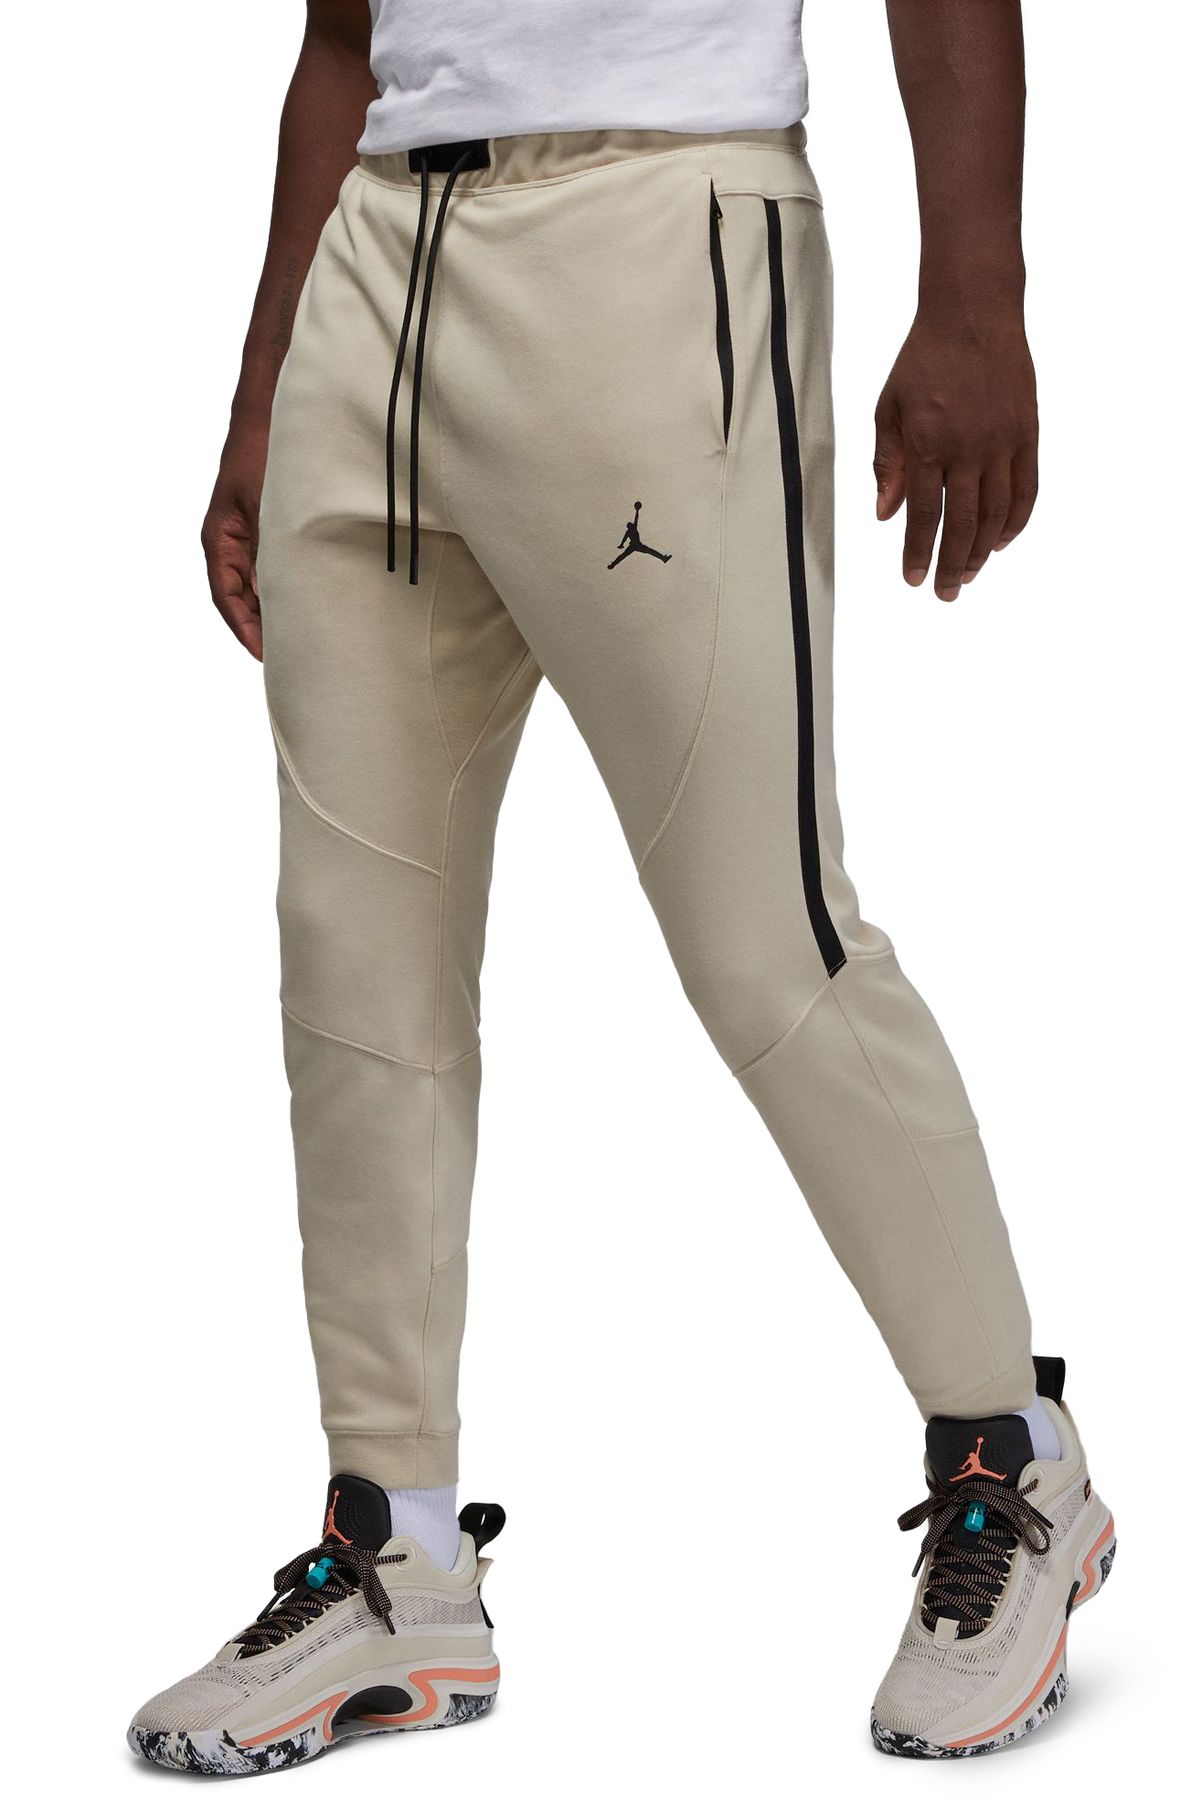 Jordan Sport Dri-FIT Crossover Fleece Pants Black - BLACK/WHITE